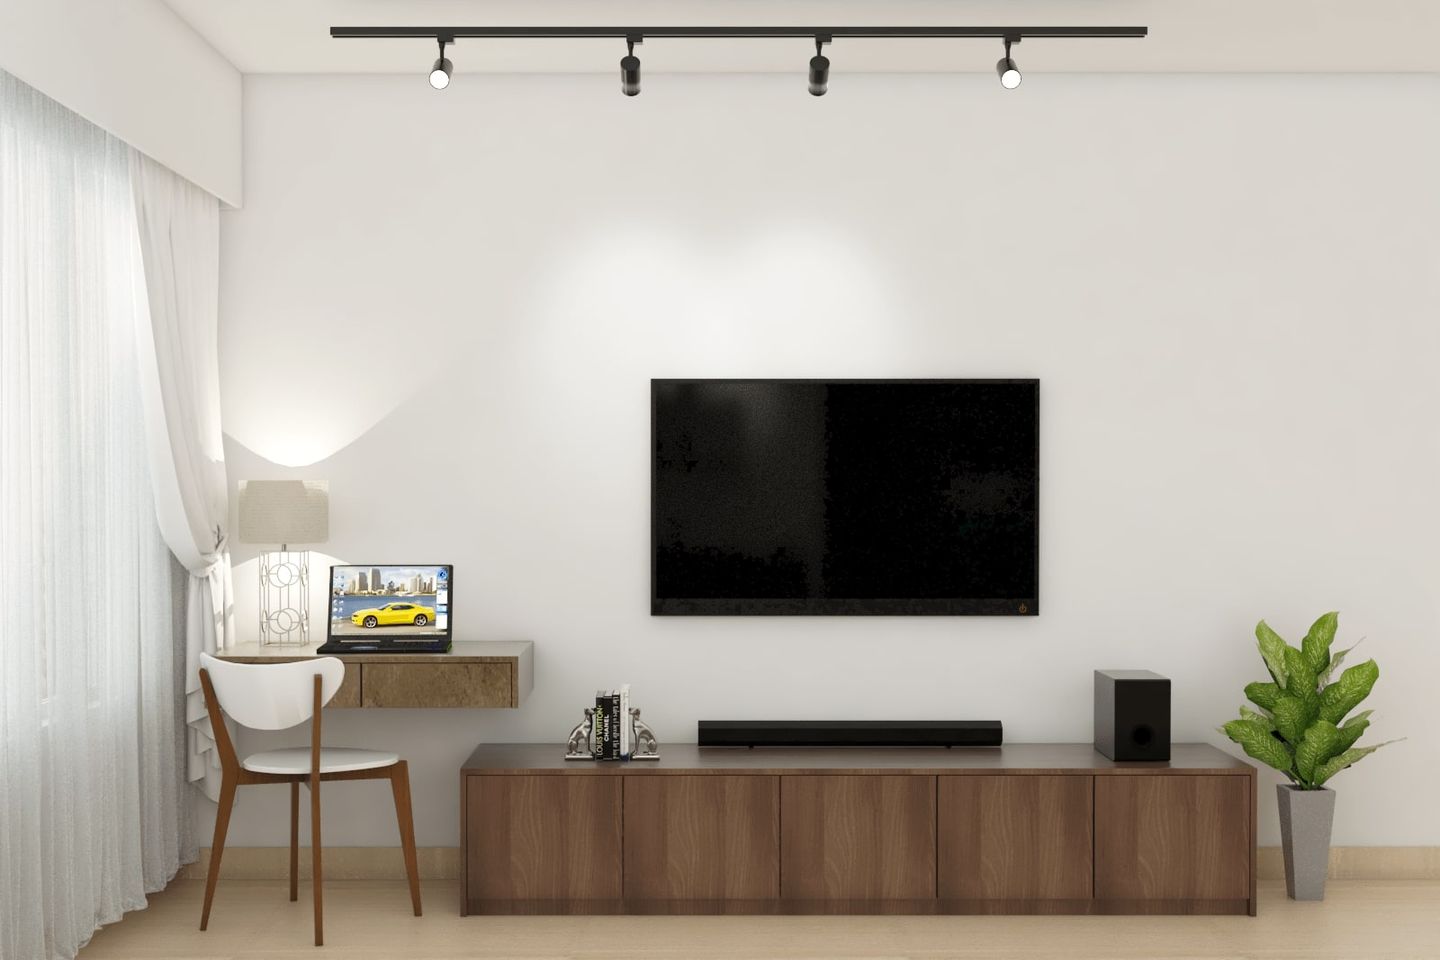 Living Room Design With TV Unit - Livspace